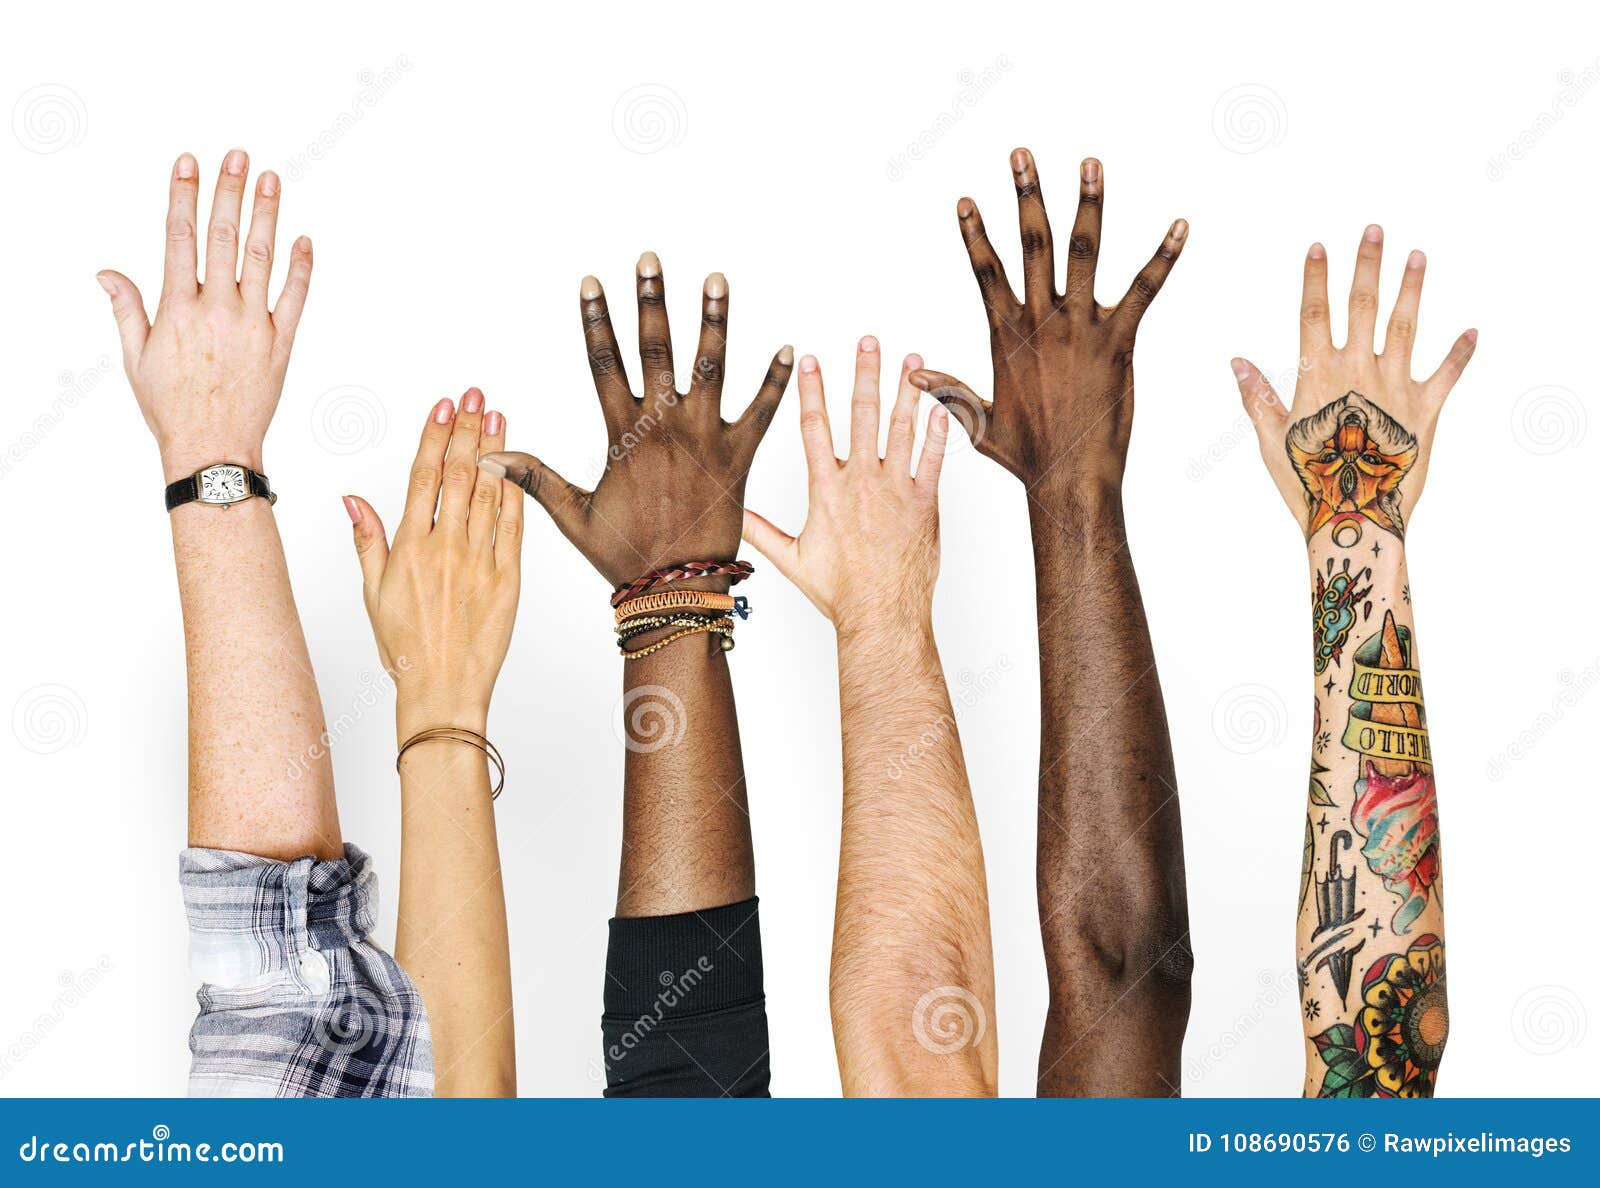 diversity hands raised up gesture